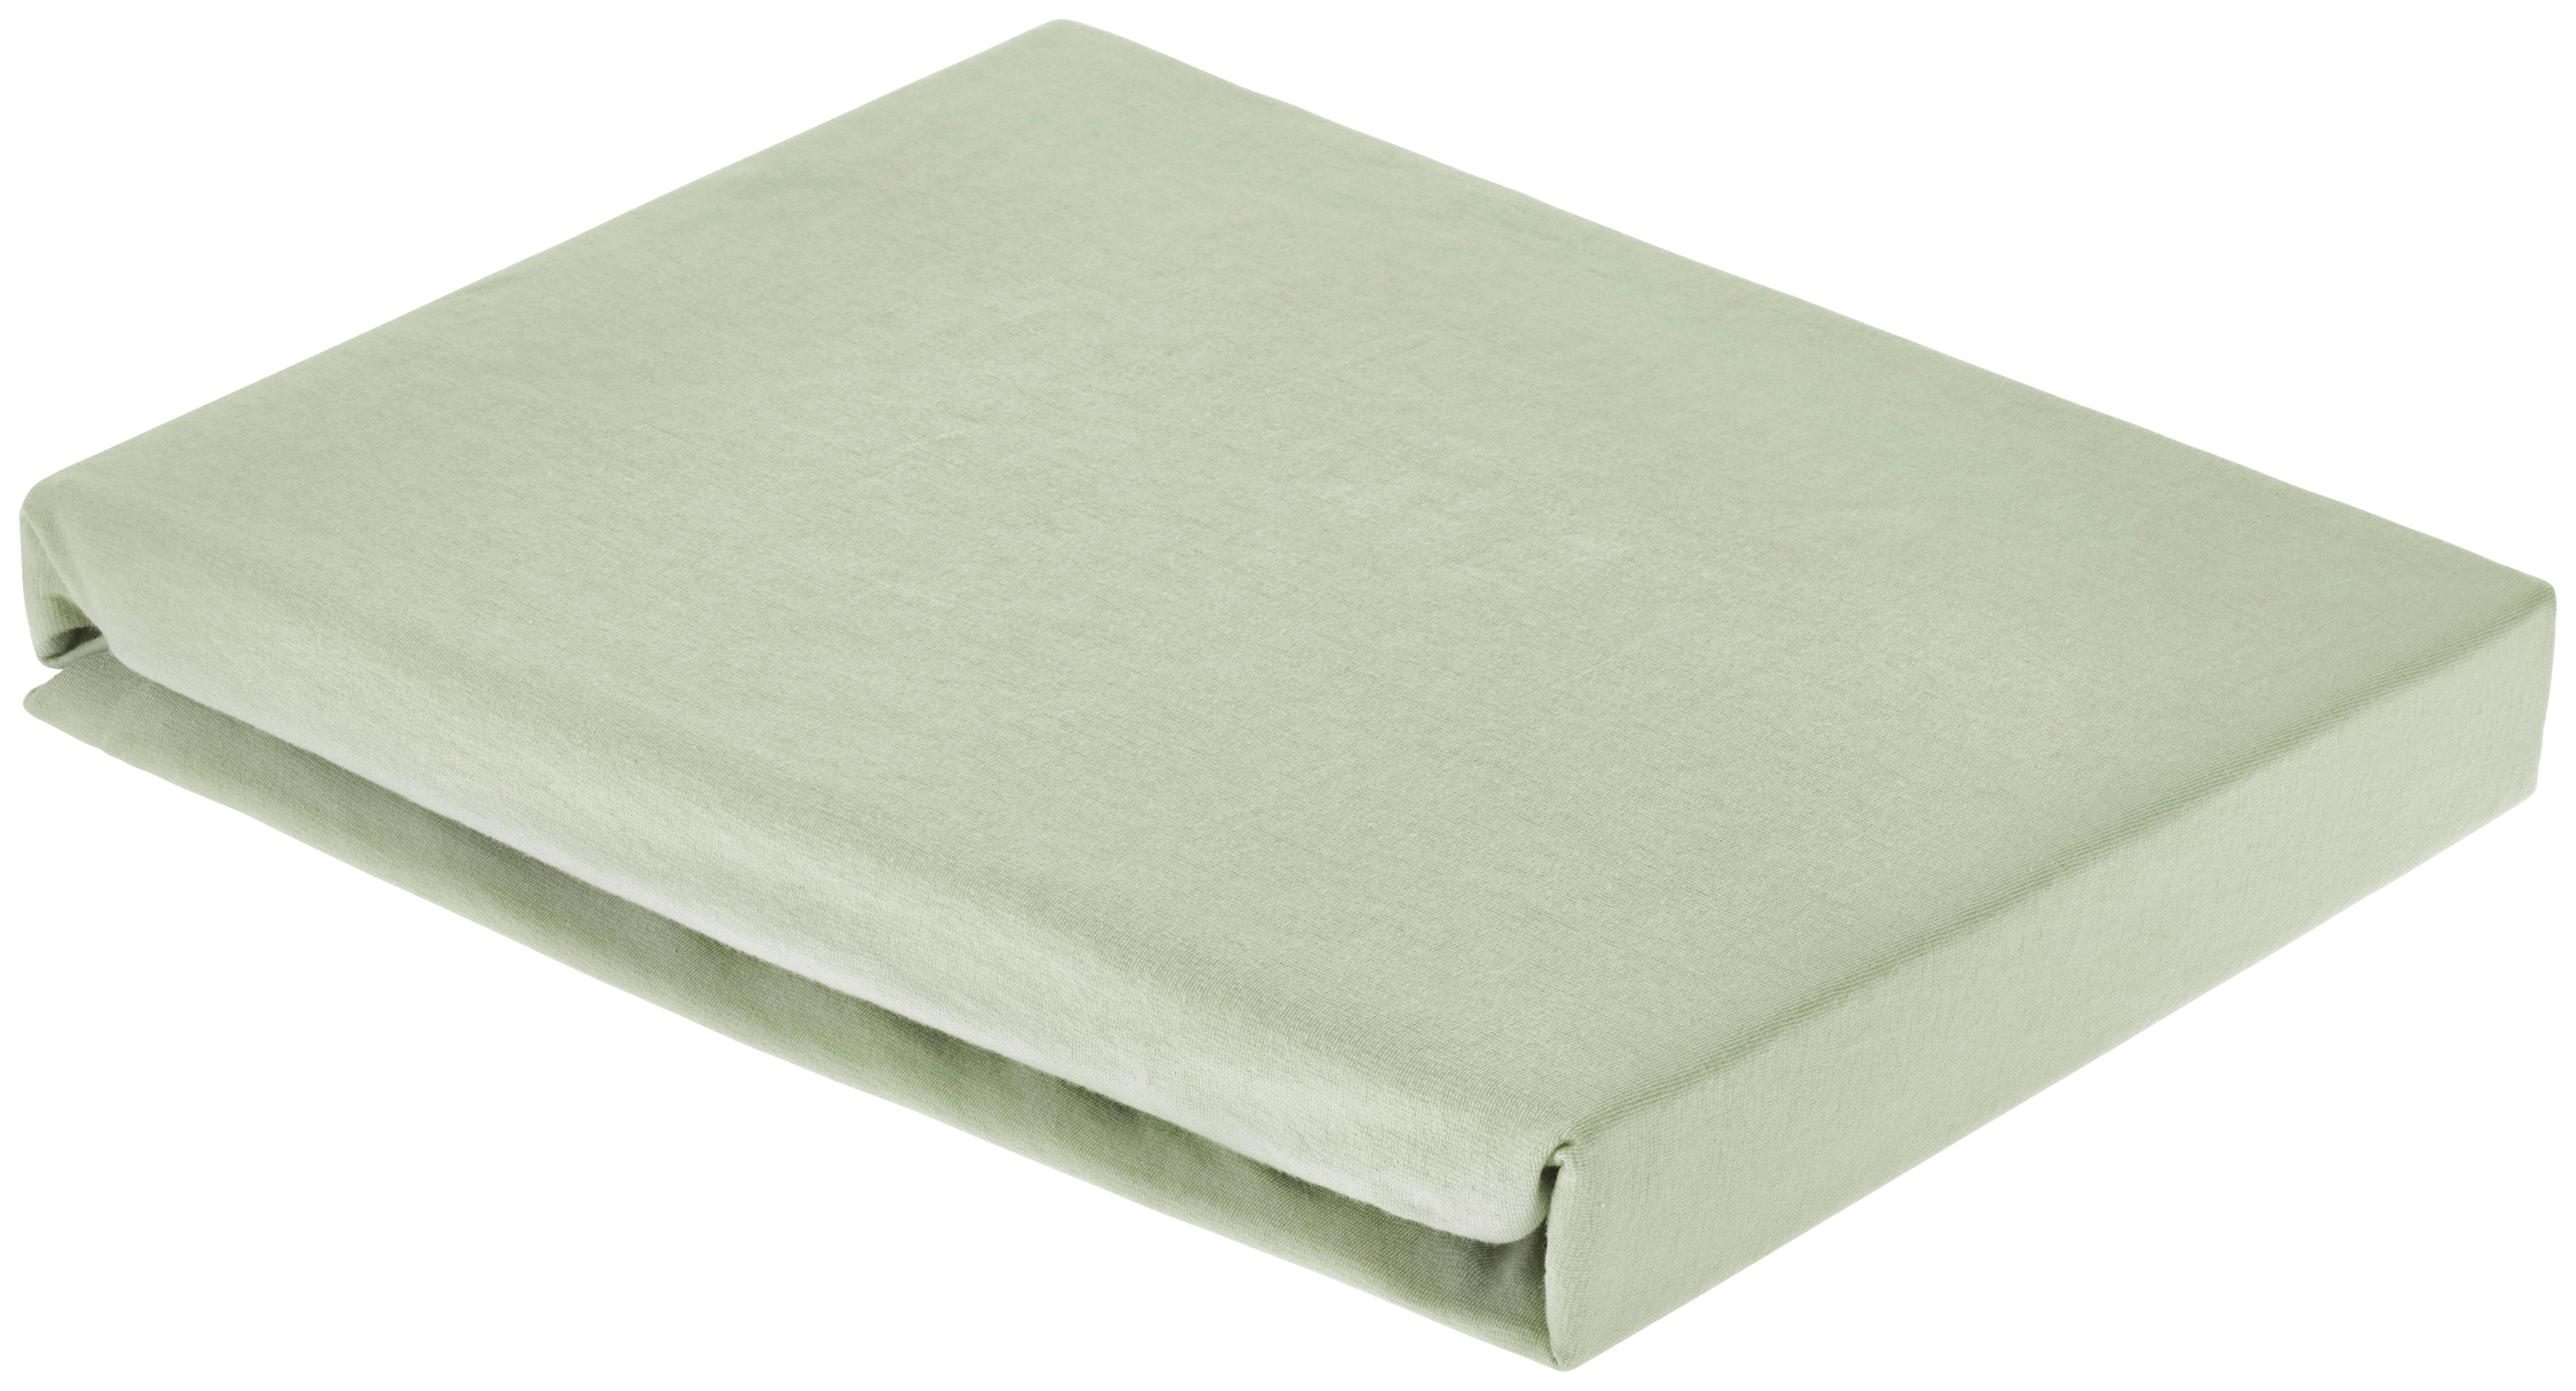 Prostěradlo Na Vrchní Matraci Elasthan Topper, 180/200/15cm - zelená, textil (180/200/15cm) - Premium Living